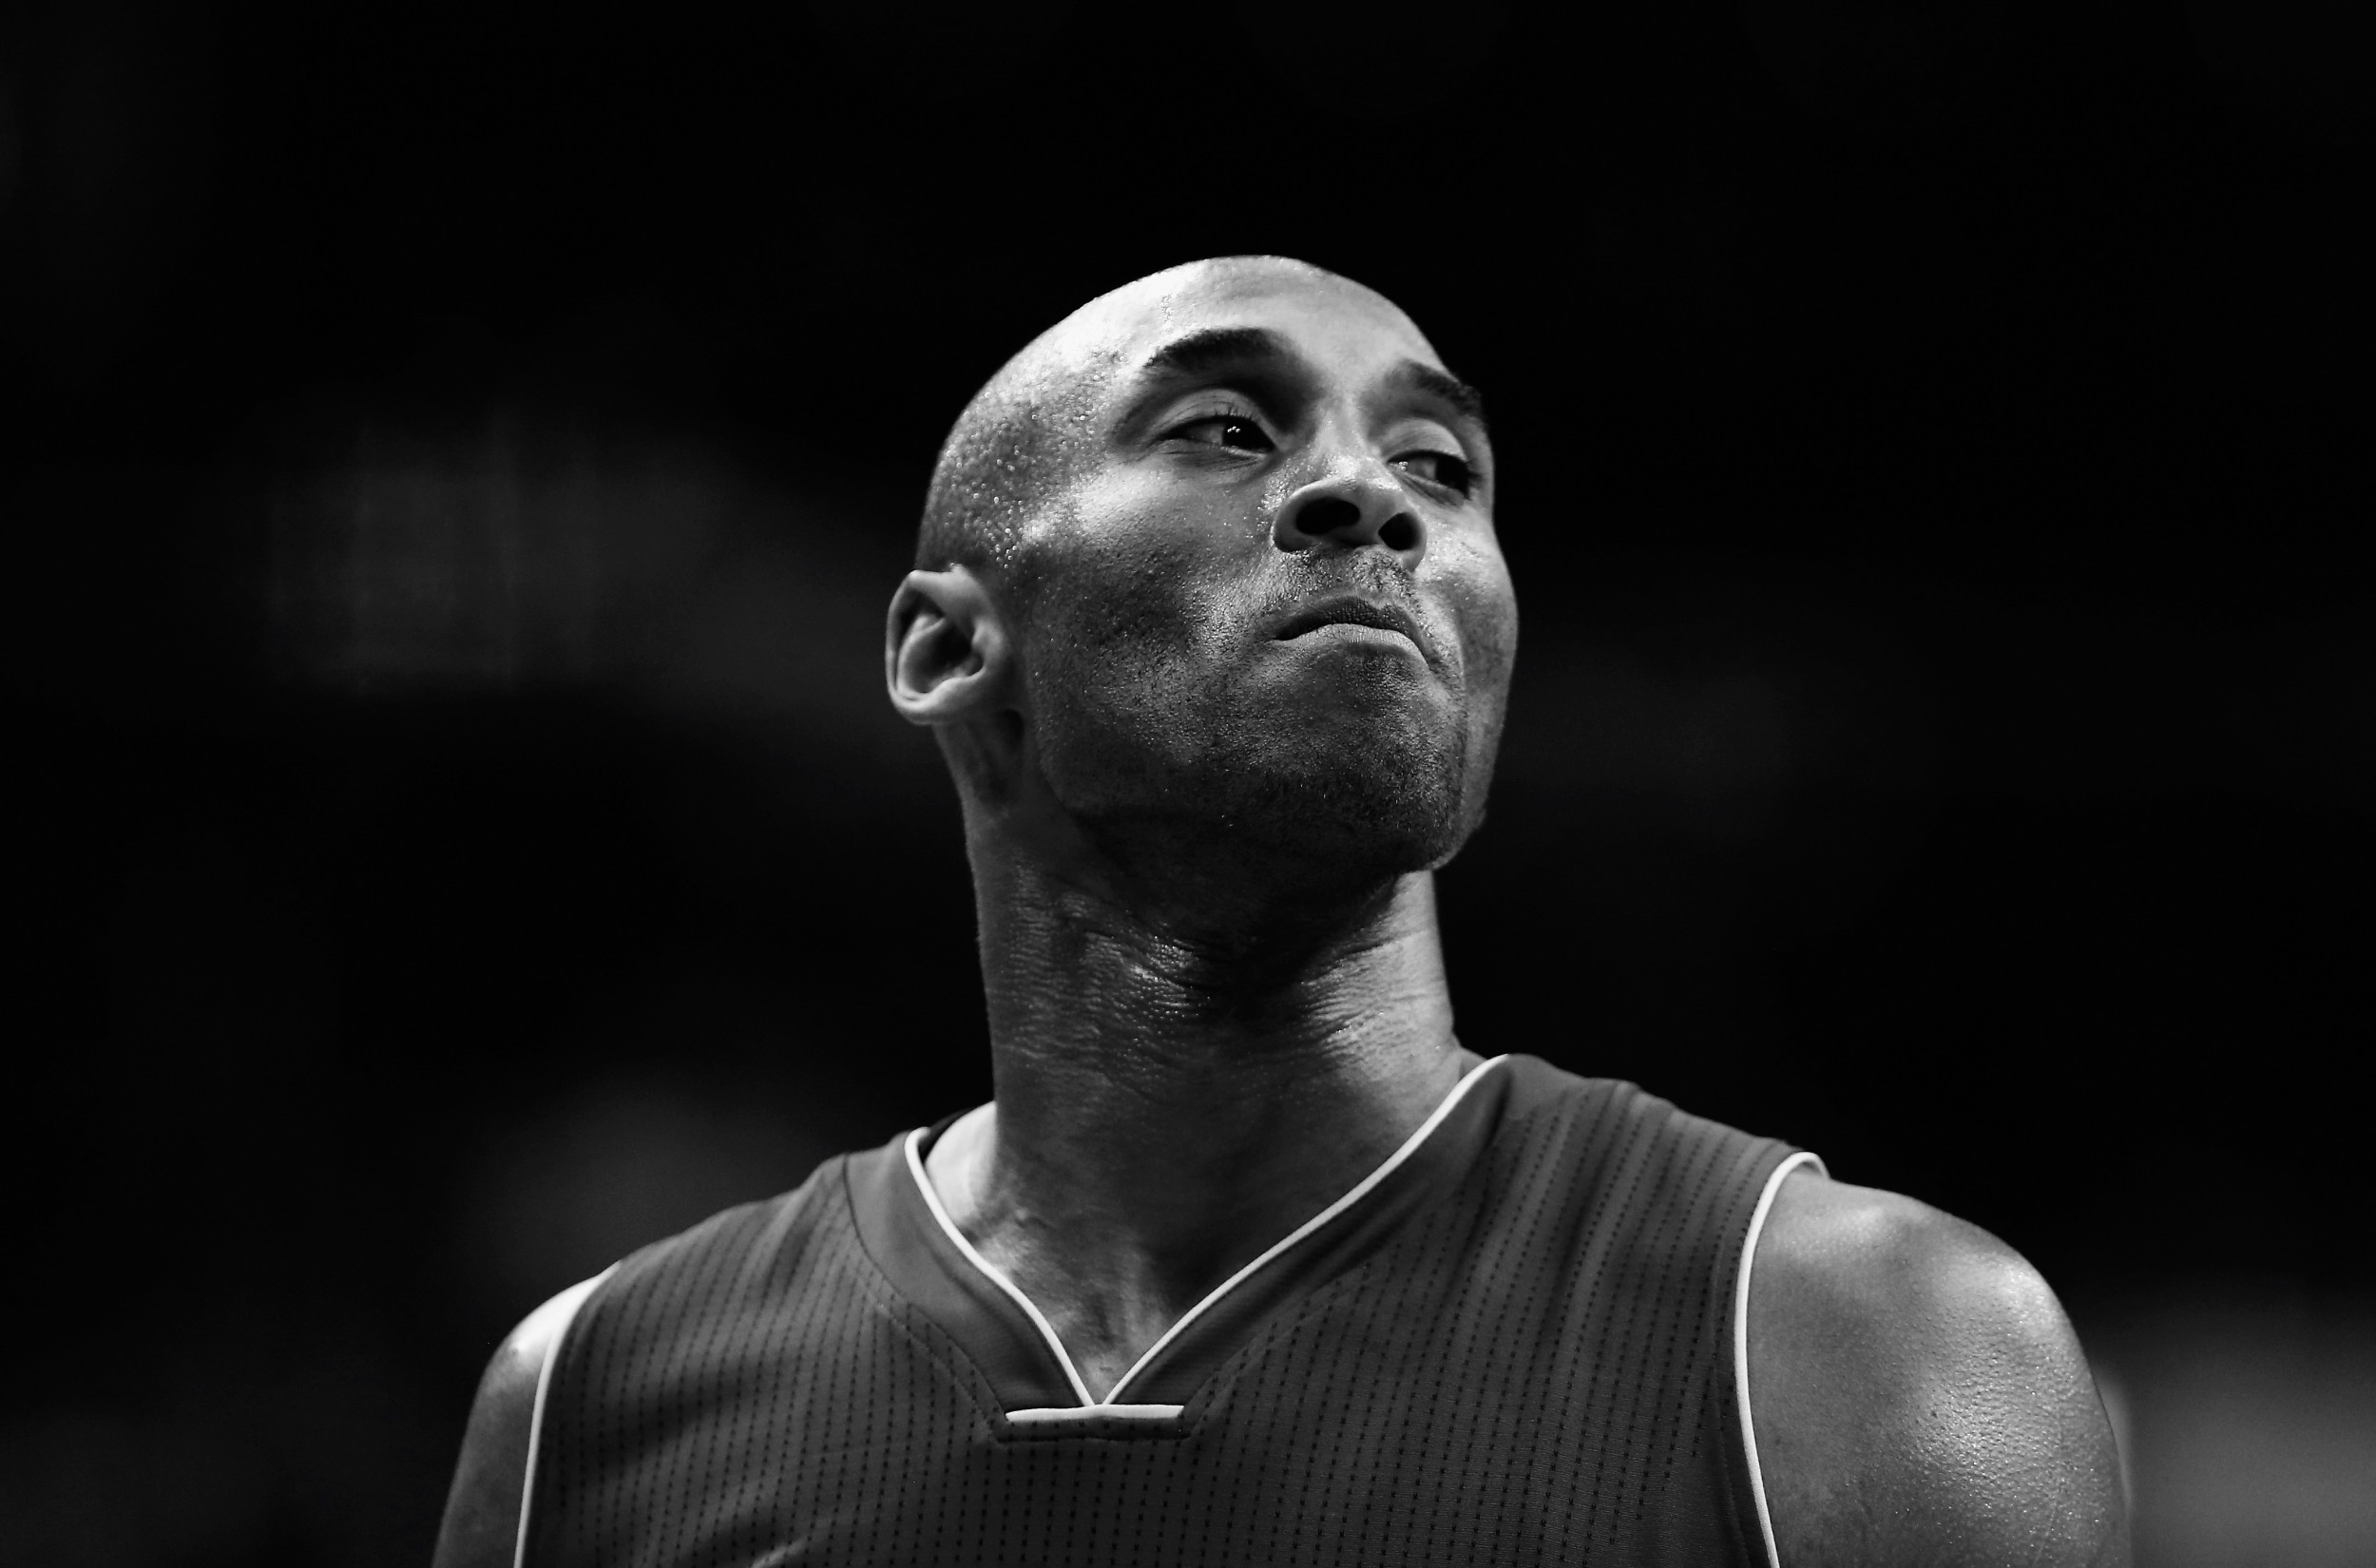 Nike Honour Kobe Bryant in Powerful New Ad Narrated by Kendrick Lamar